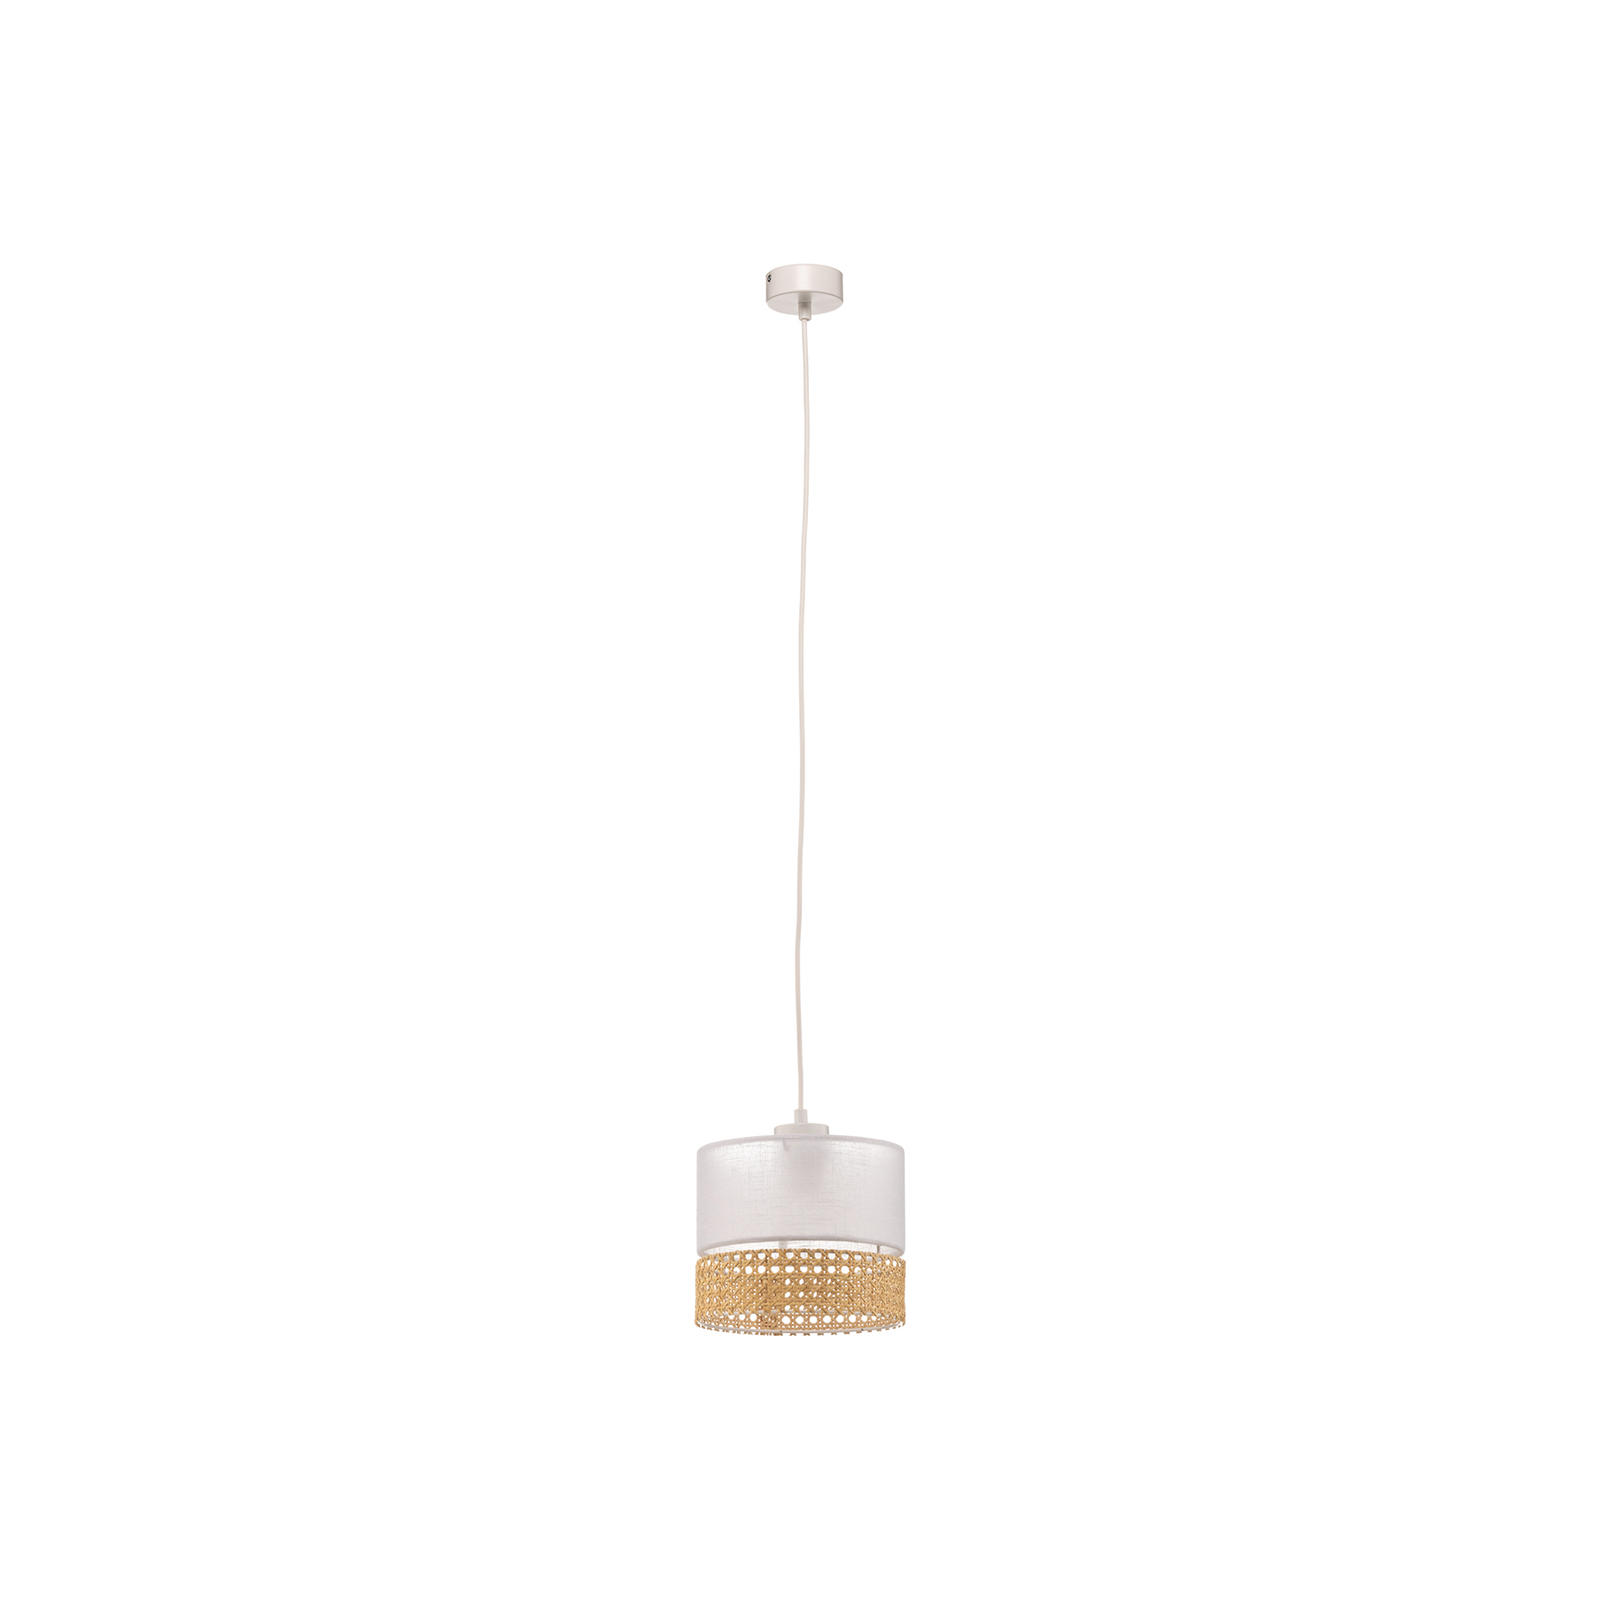 Hanglamp Paglia wit/rattan 1-lamp Ø 20 cm